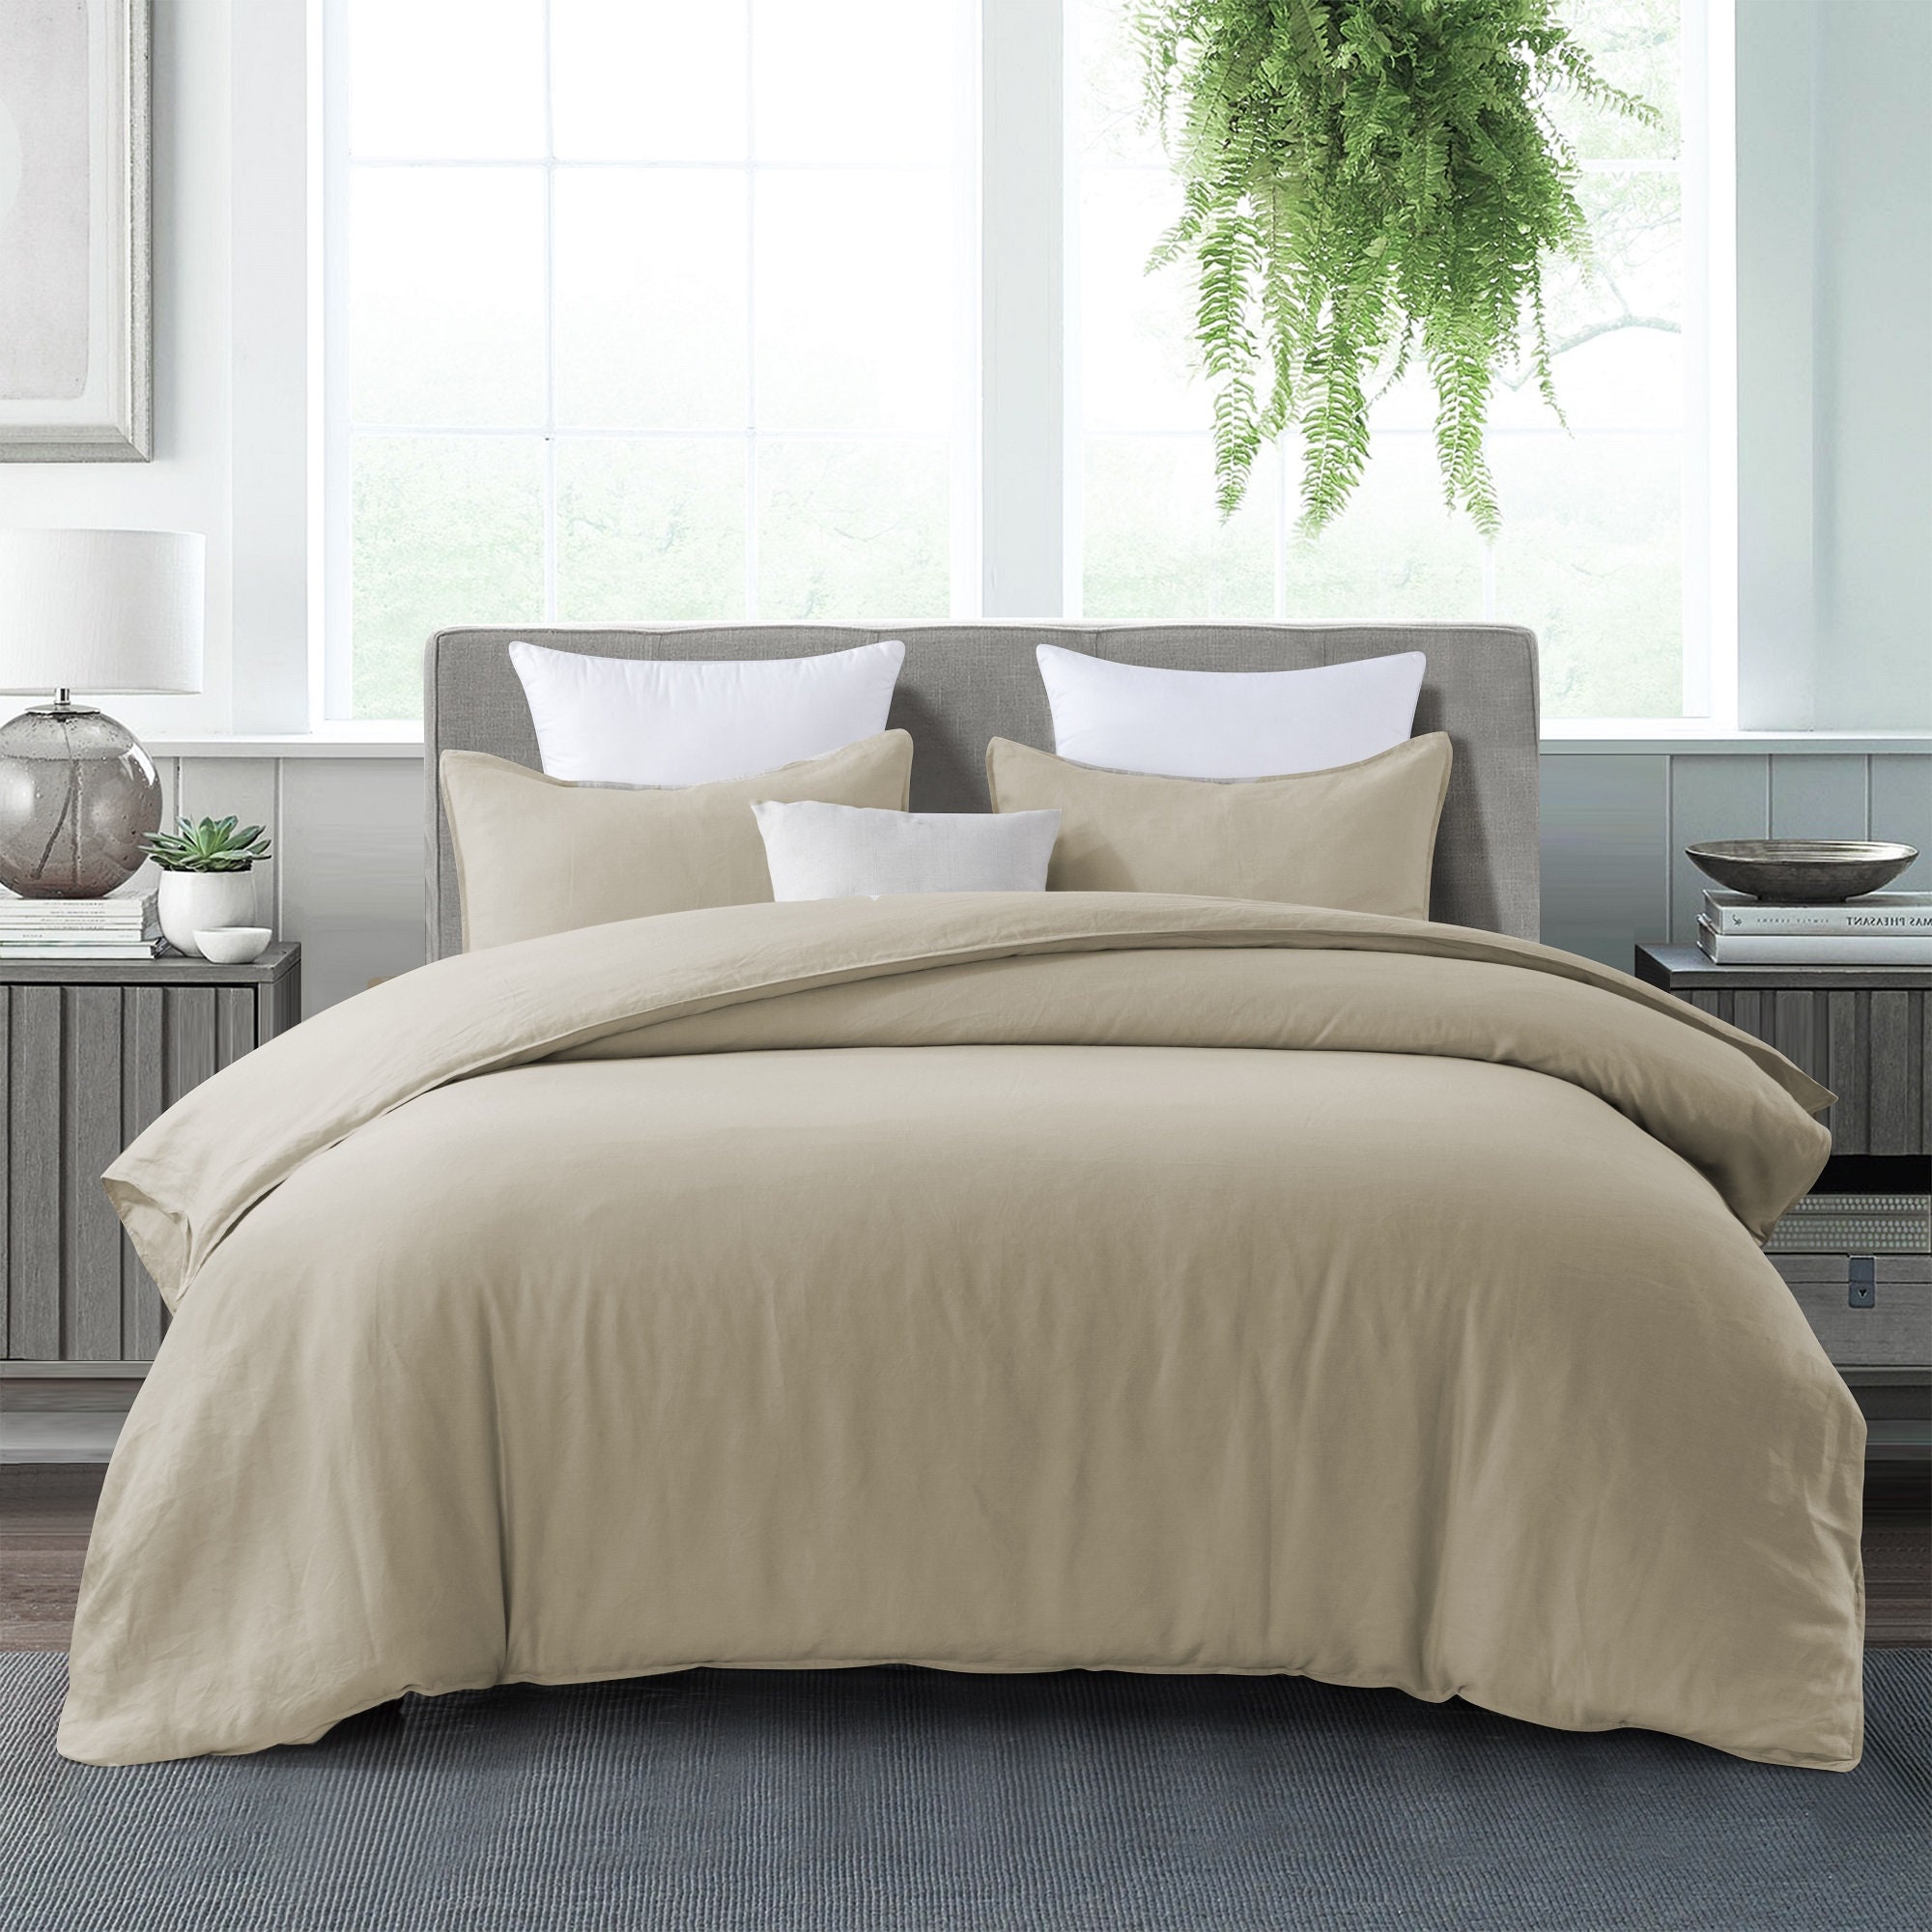 Linen Blend Duvet Cover & Pillow Shams Set 3 Pcs - Queen King | Stone Washed Soft Linen Cotton Comforter Free Shipping